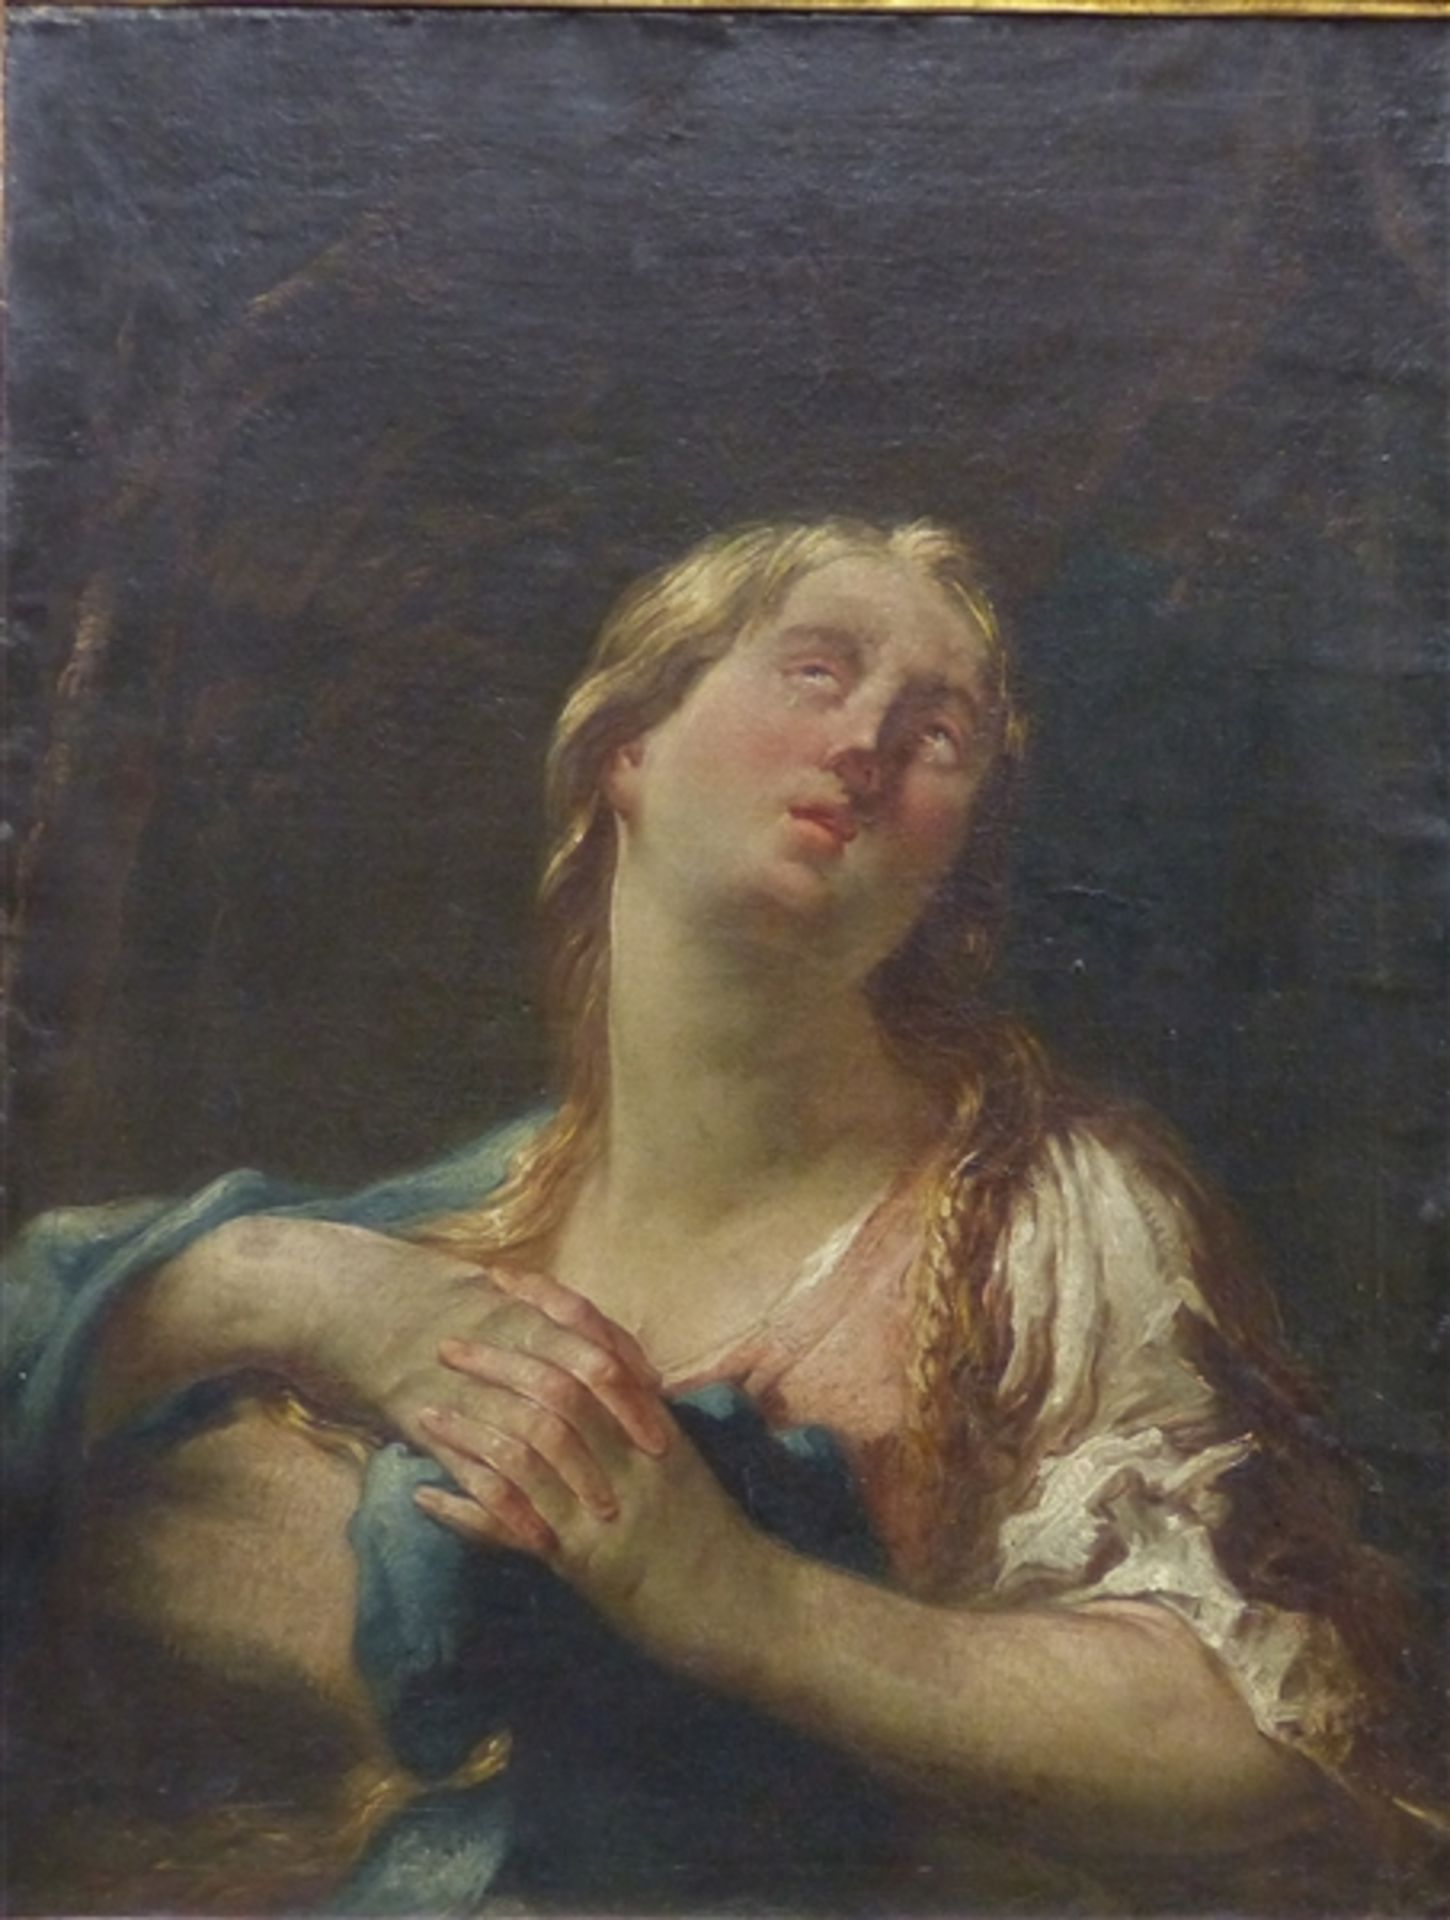 Heiligenmaler, um 1800 Öl auf Leinwand, "Heilige Magdalena", 83 x 64 cm, im Rahmen,